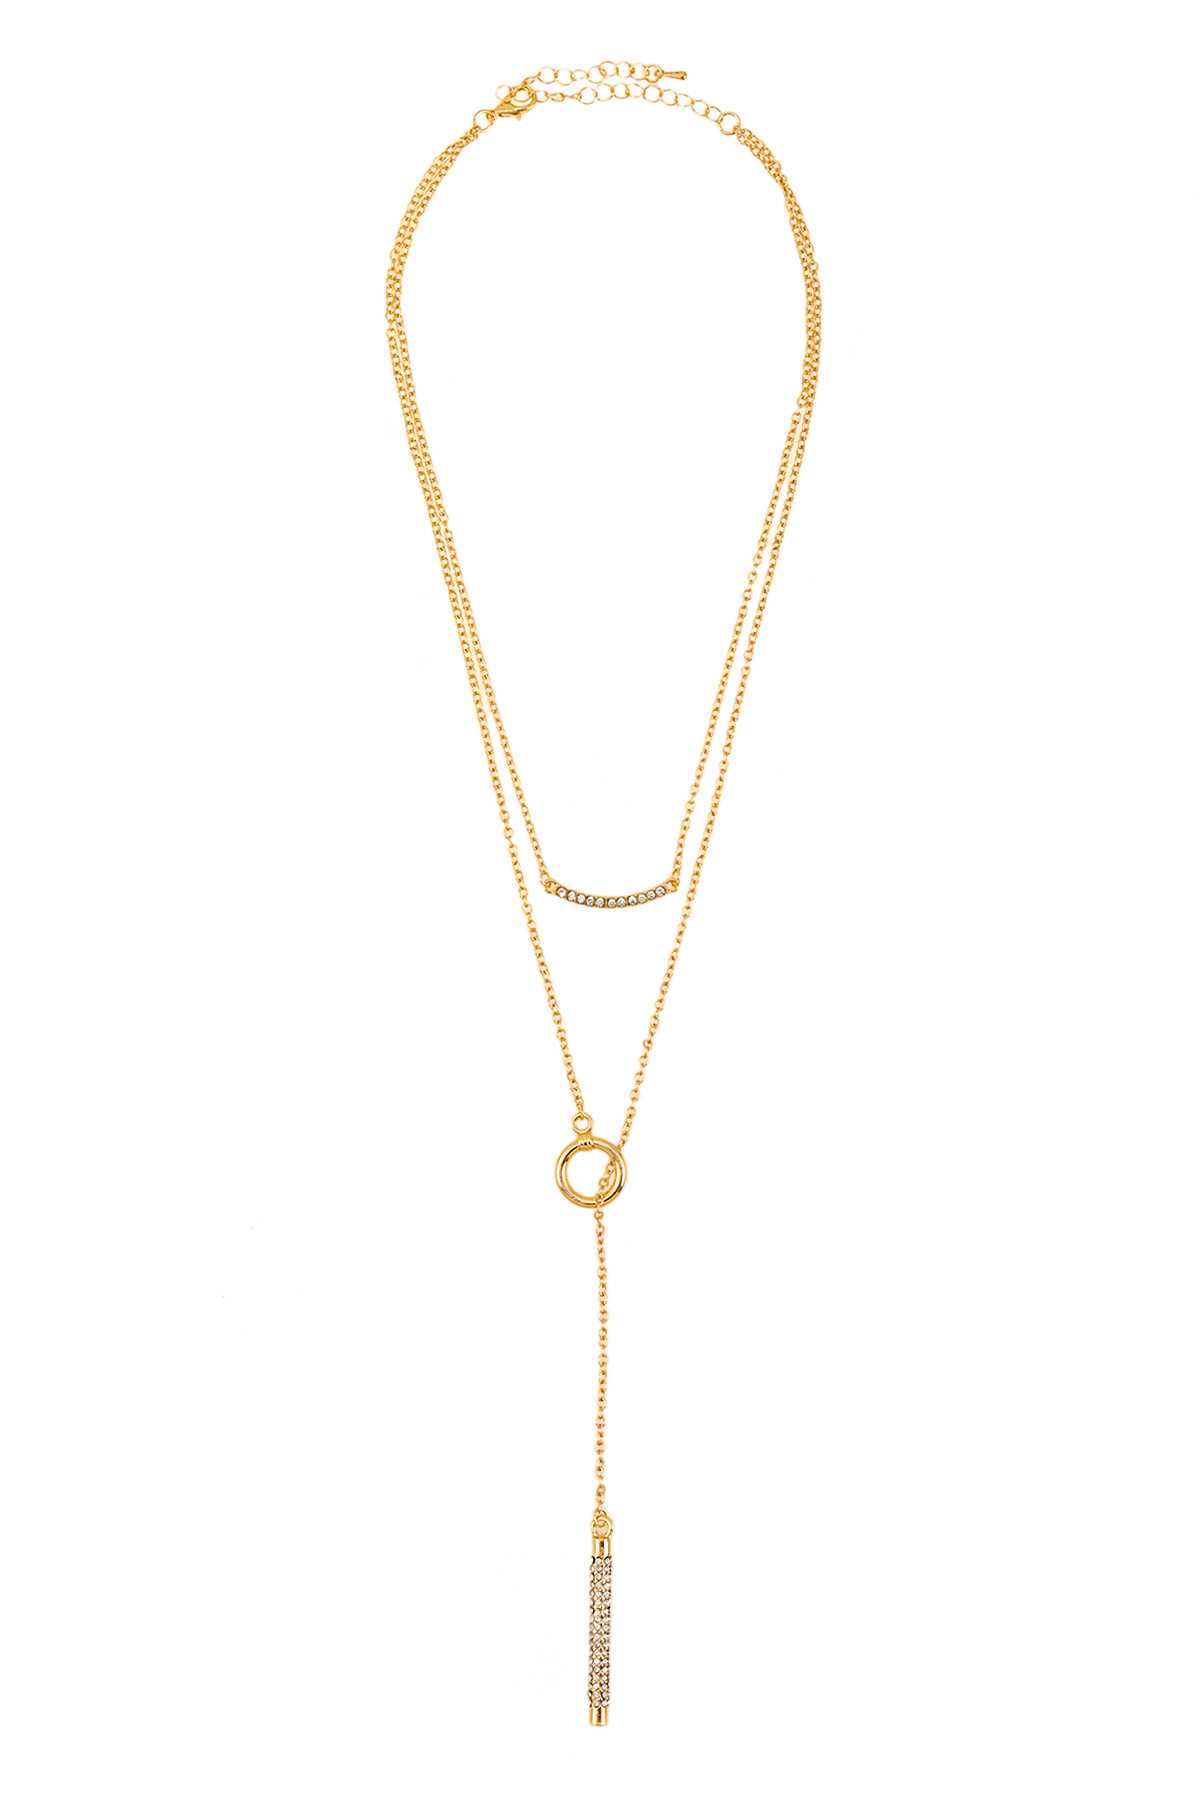 Rhinestone Bar Charm Layered Toggle Chain Necklace